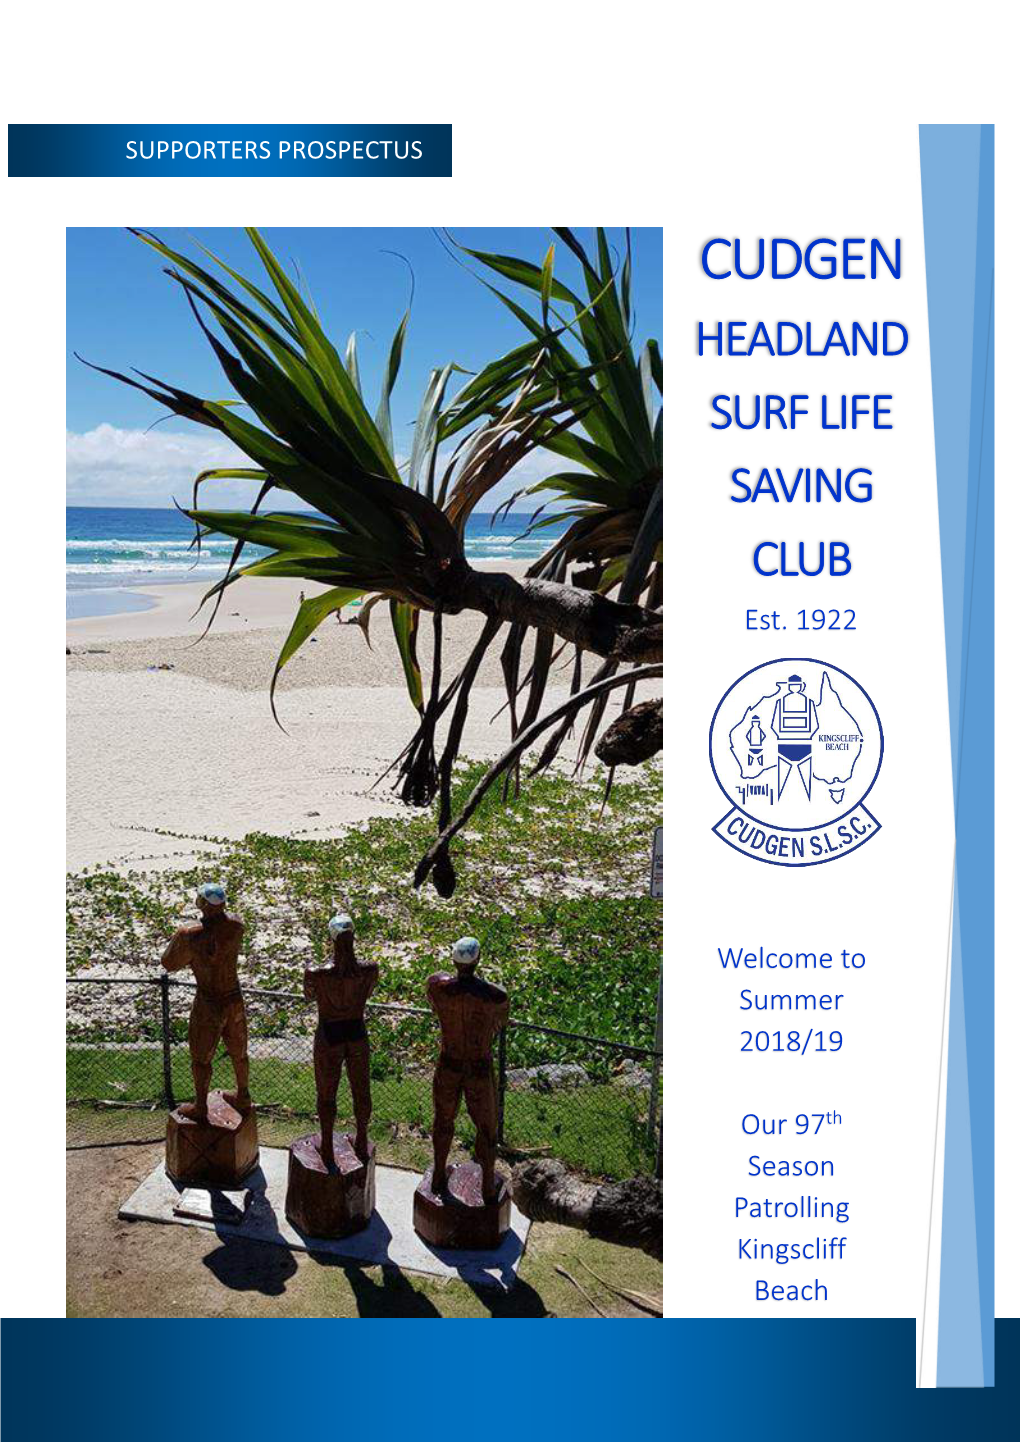 CUDGEN HEADLAND SURF LIFE SAVING CLUB Est